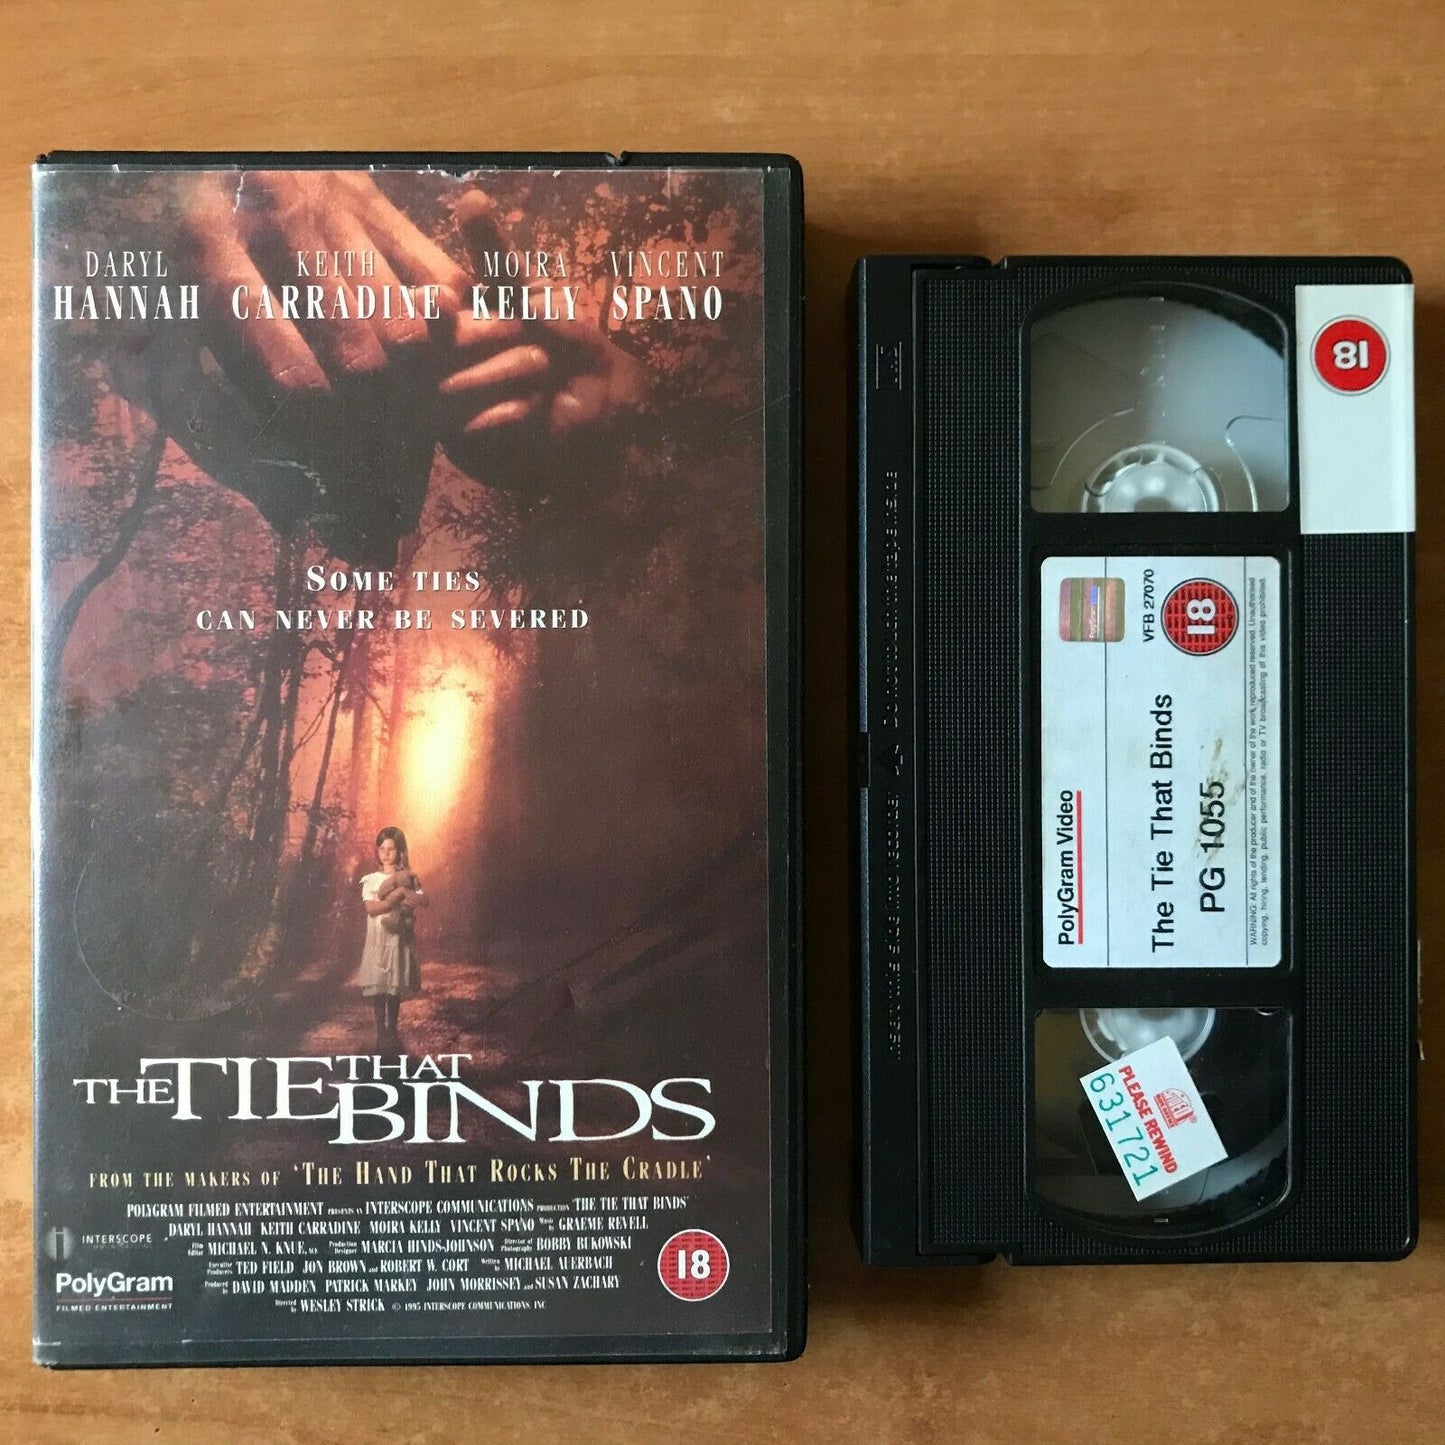 The Tie That Binds: Crime Thriller - Drama [Big Box] Rental - Daryl Hannah - VHS-